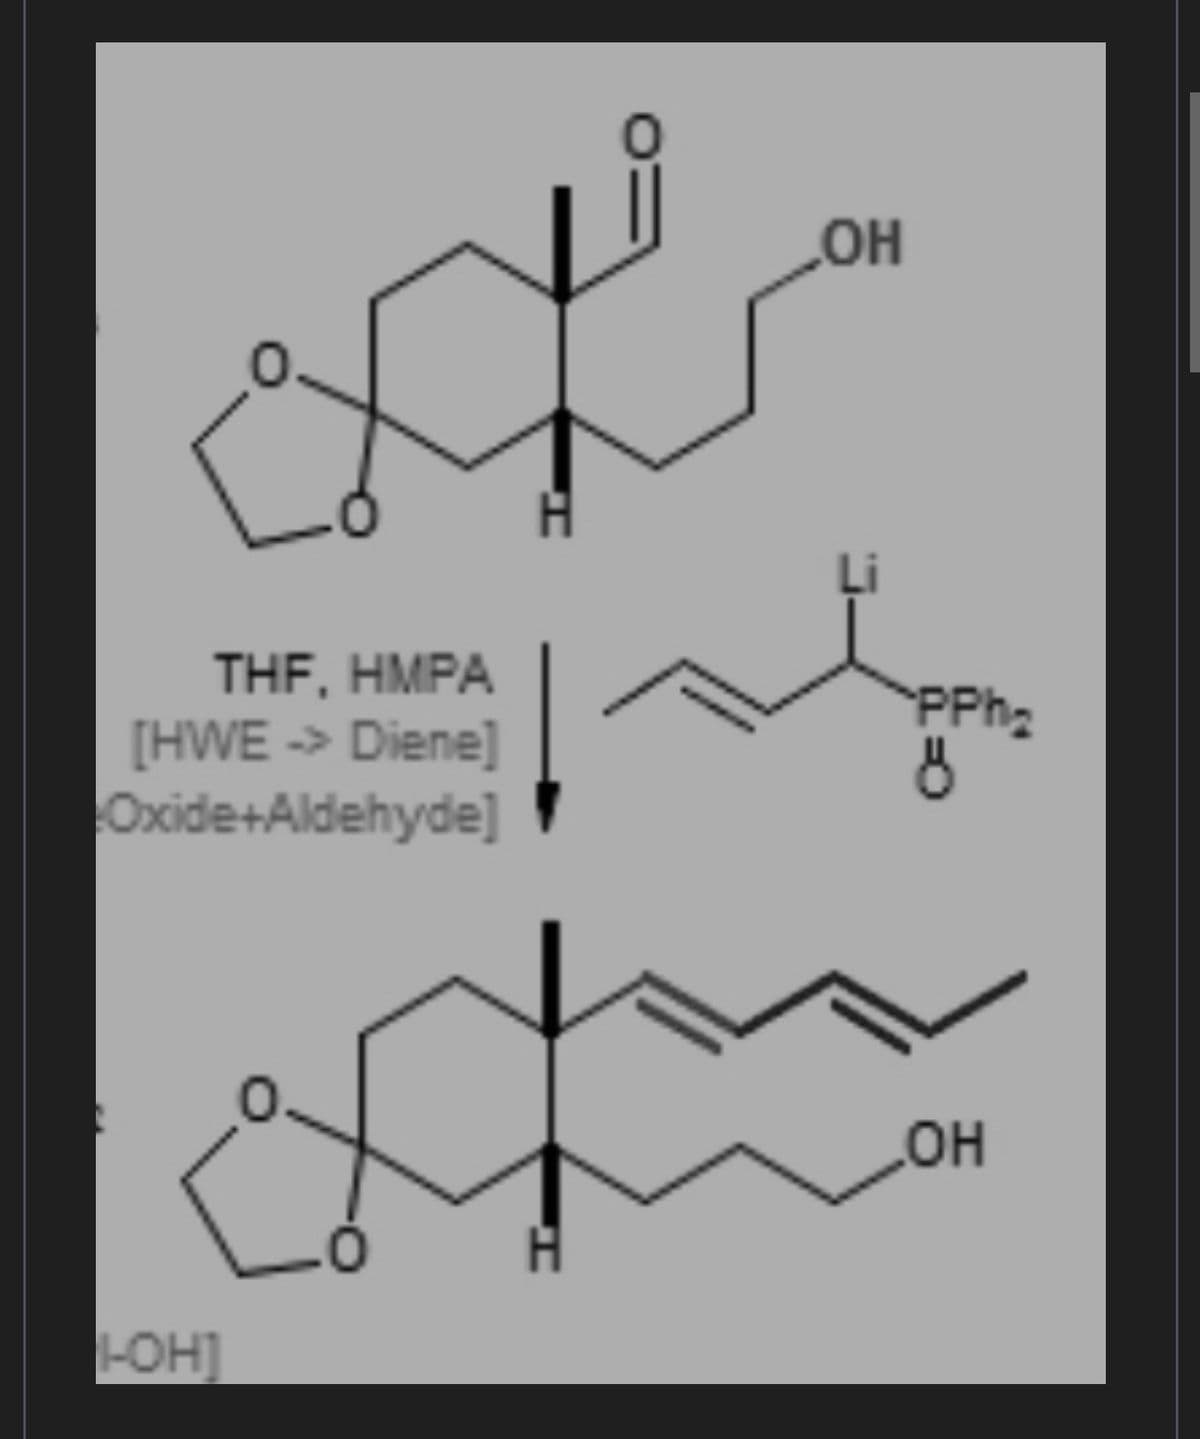 THF, HMPA
[HWE -> Diene]
Oxide+Aldehyde]
юH]
0
ОН
PPh₂
у
OH